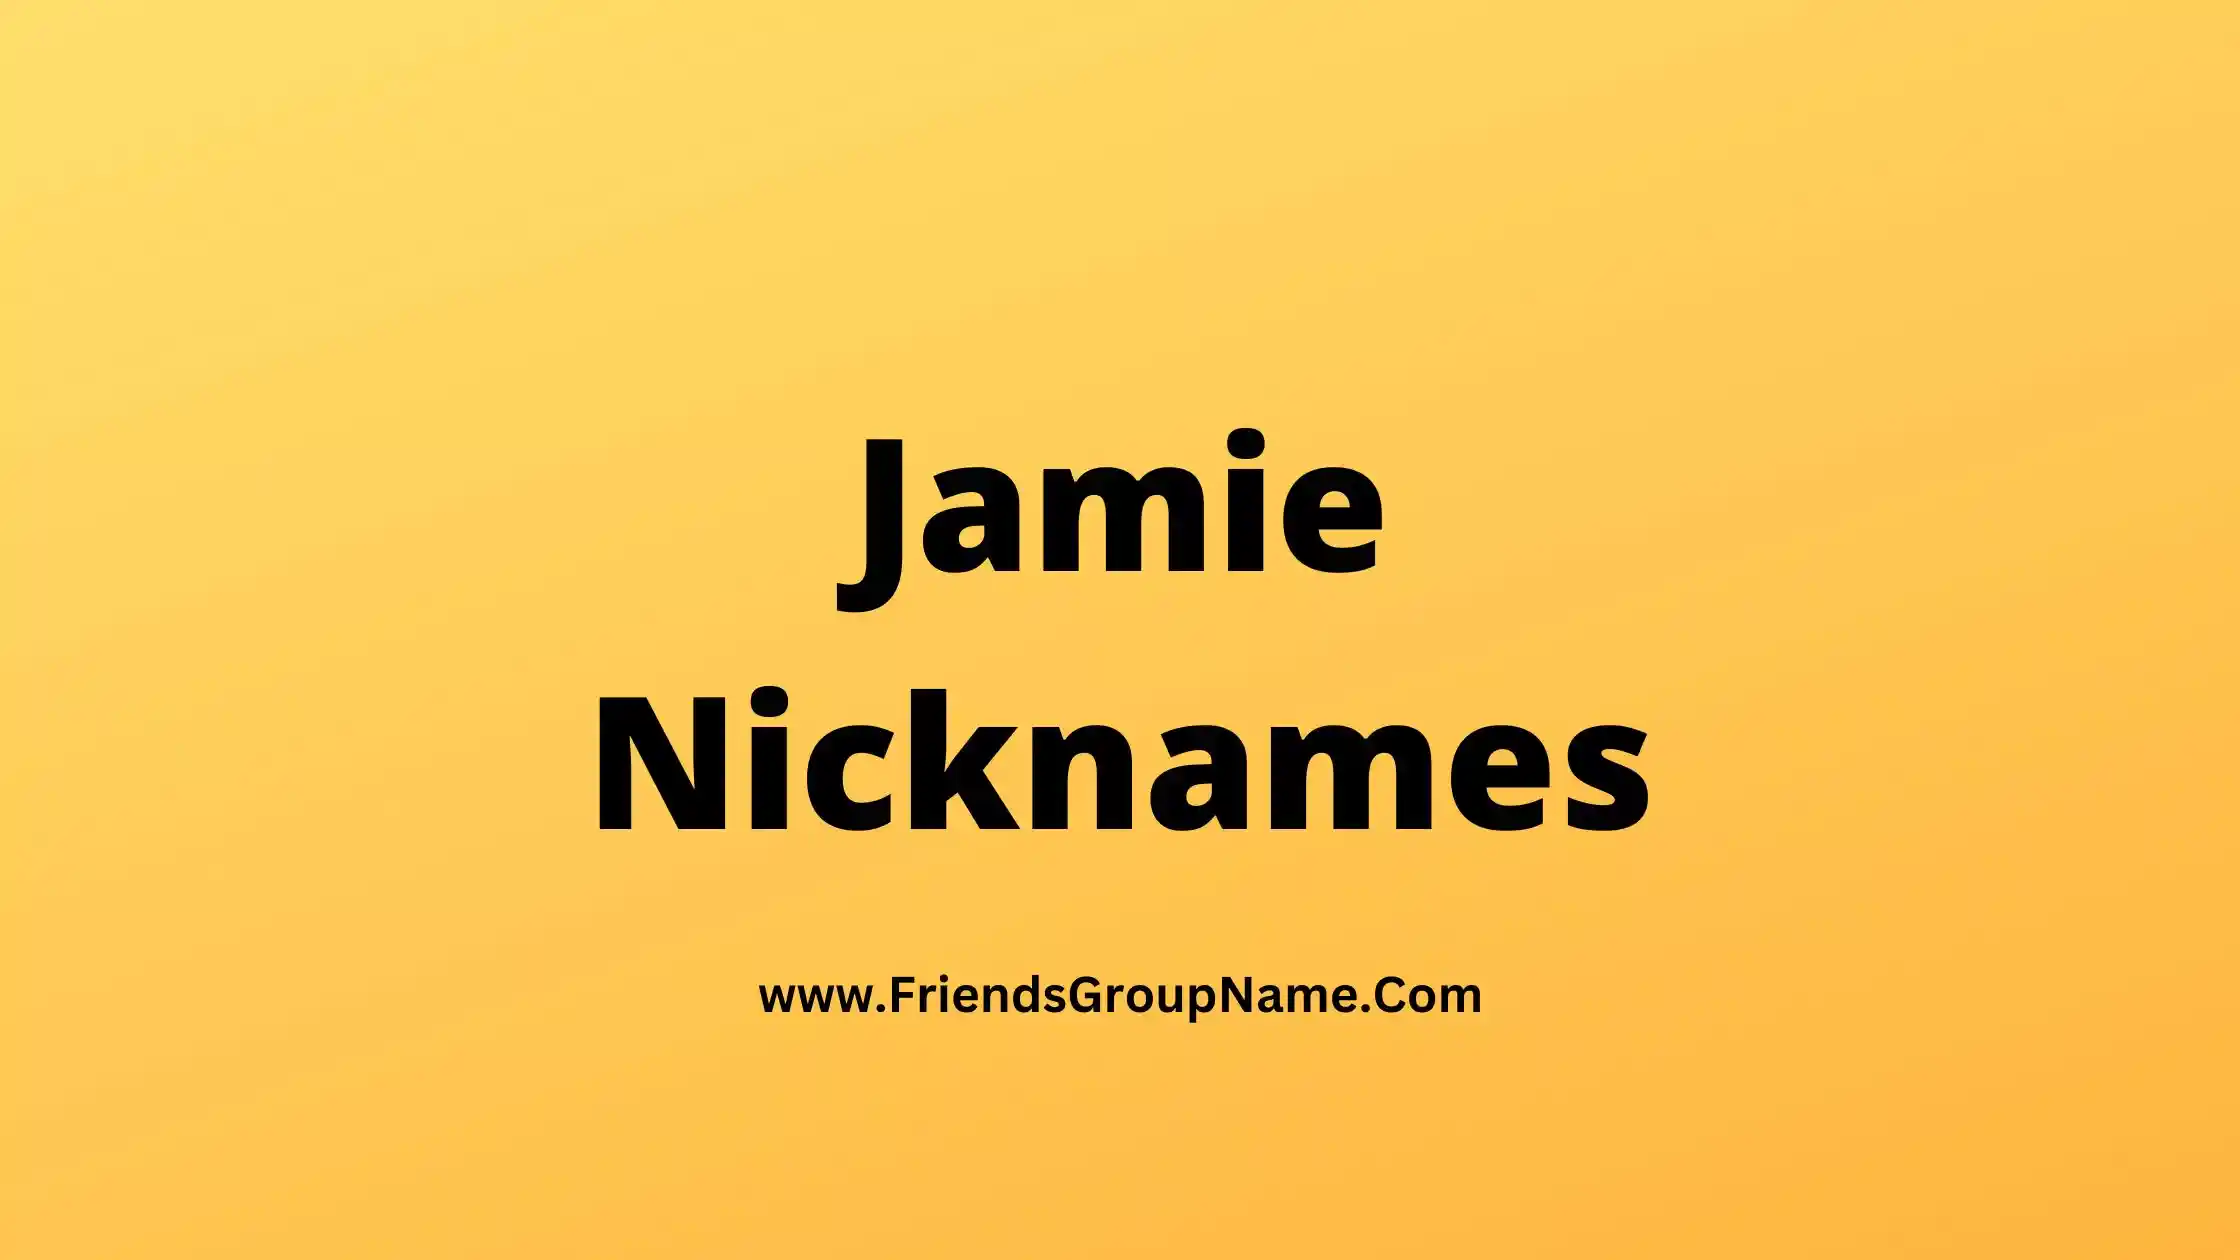 Jamie Nicknames